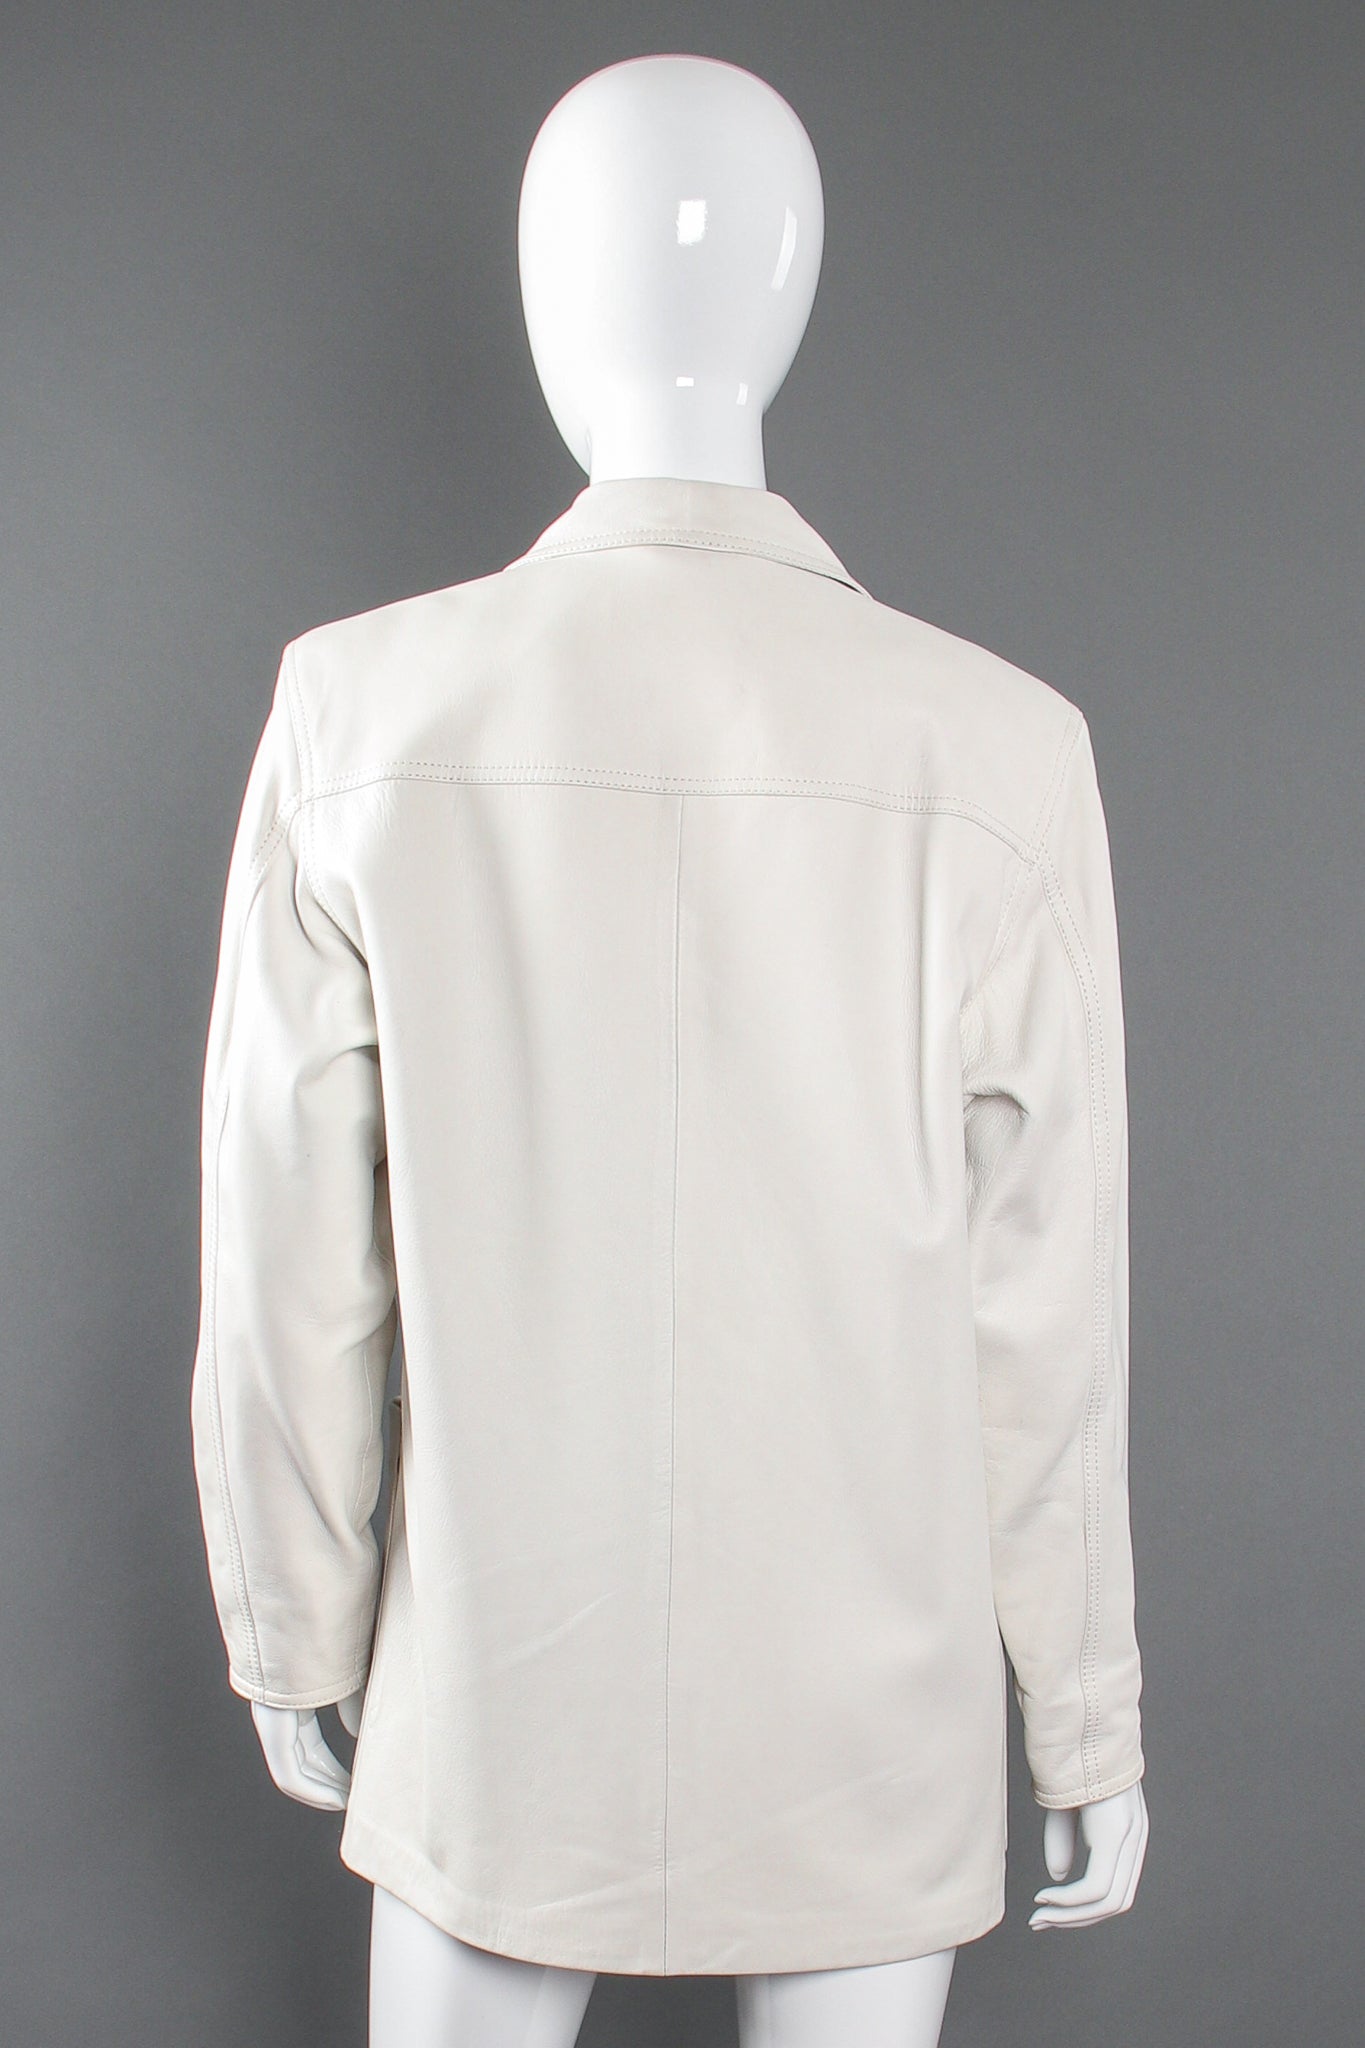 Vintage Loewe Leather Lab Jacket on Mannequin back at Recess Los Angeles